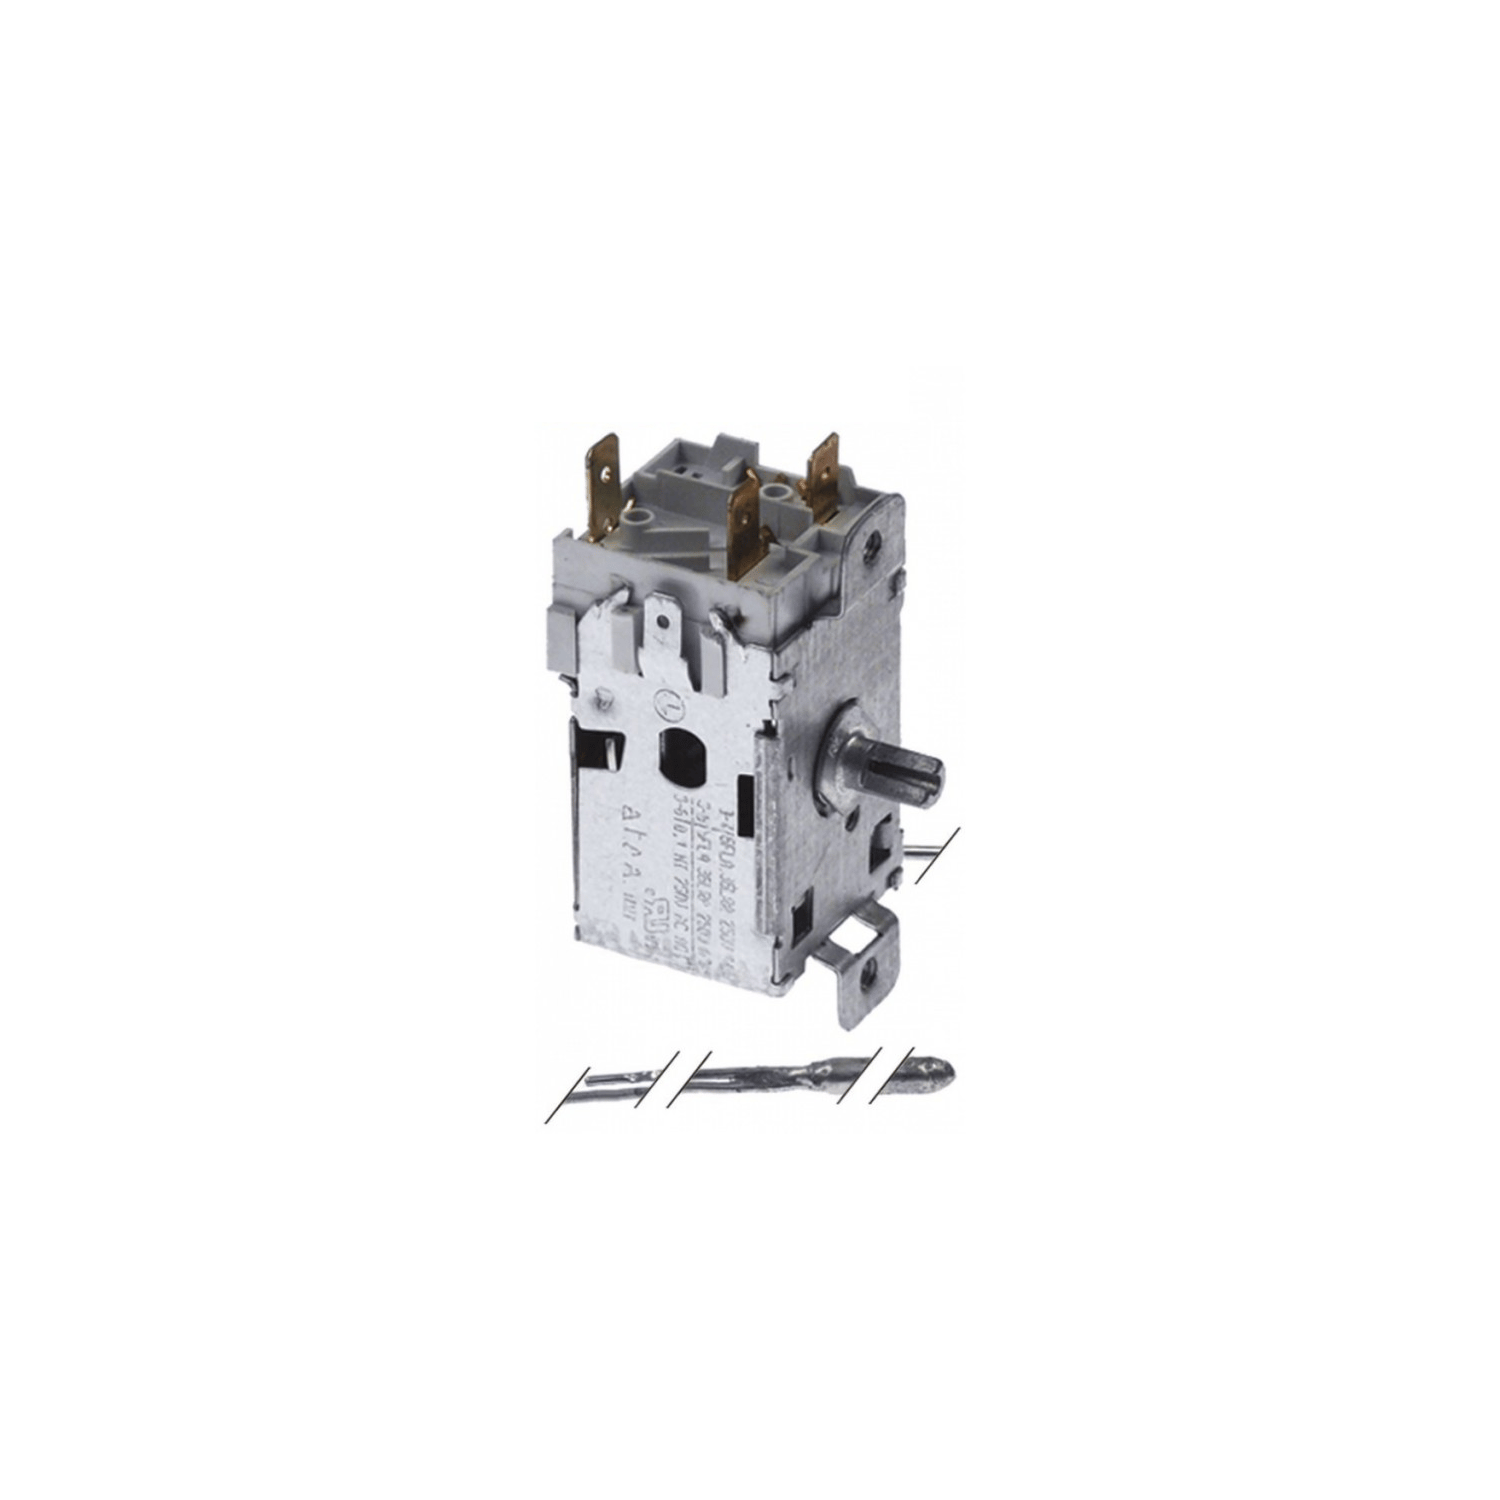 TERMOSTAT do pojemnika Ranco K22-L1075, 3 styki 6A 250V kapilara 2800 mm otwór pólksiezycowy ø 6x4 mm sonda ø 9,5x100 mm, Alternativa dla ATEA A21 0065